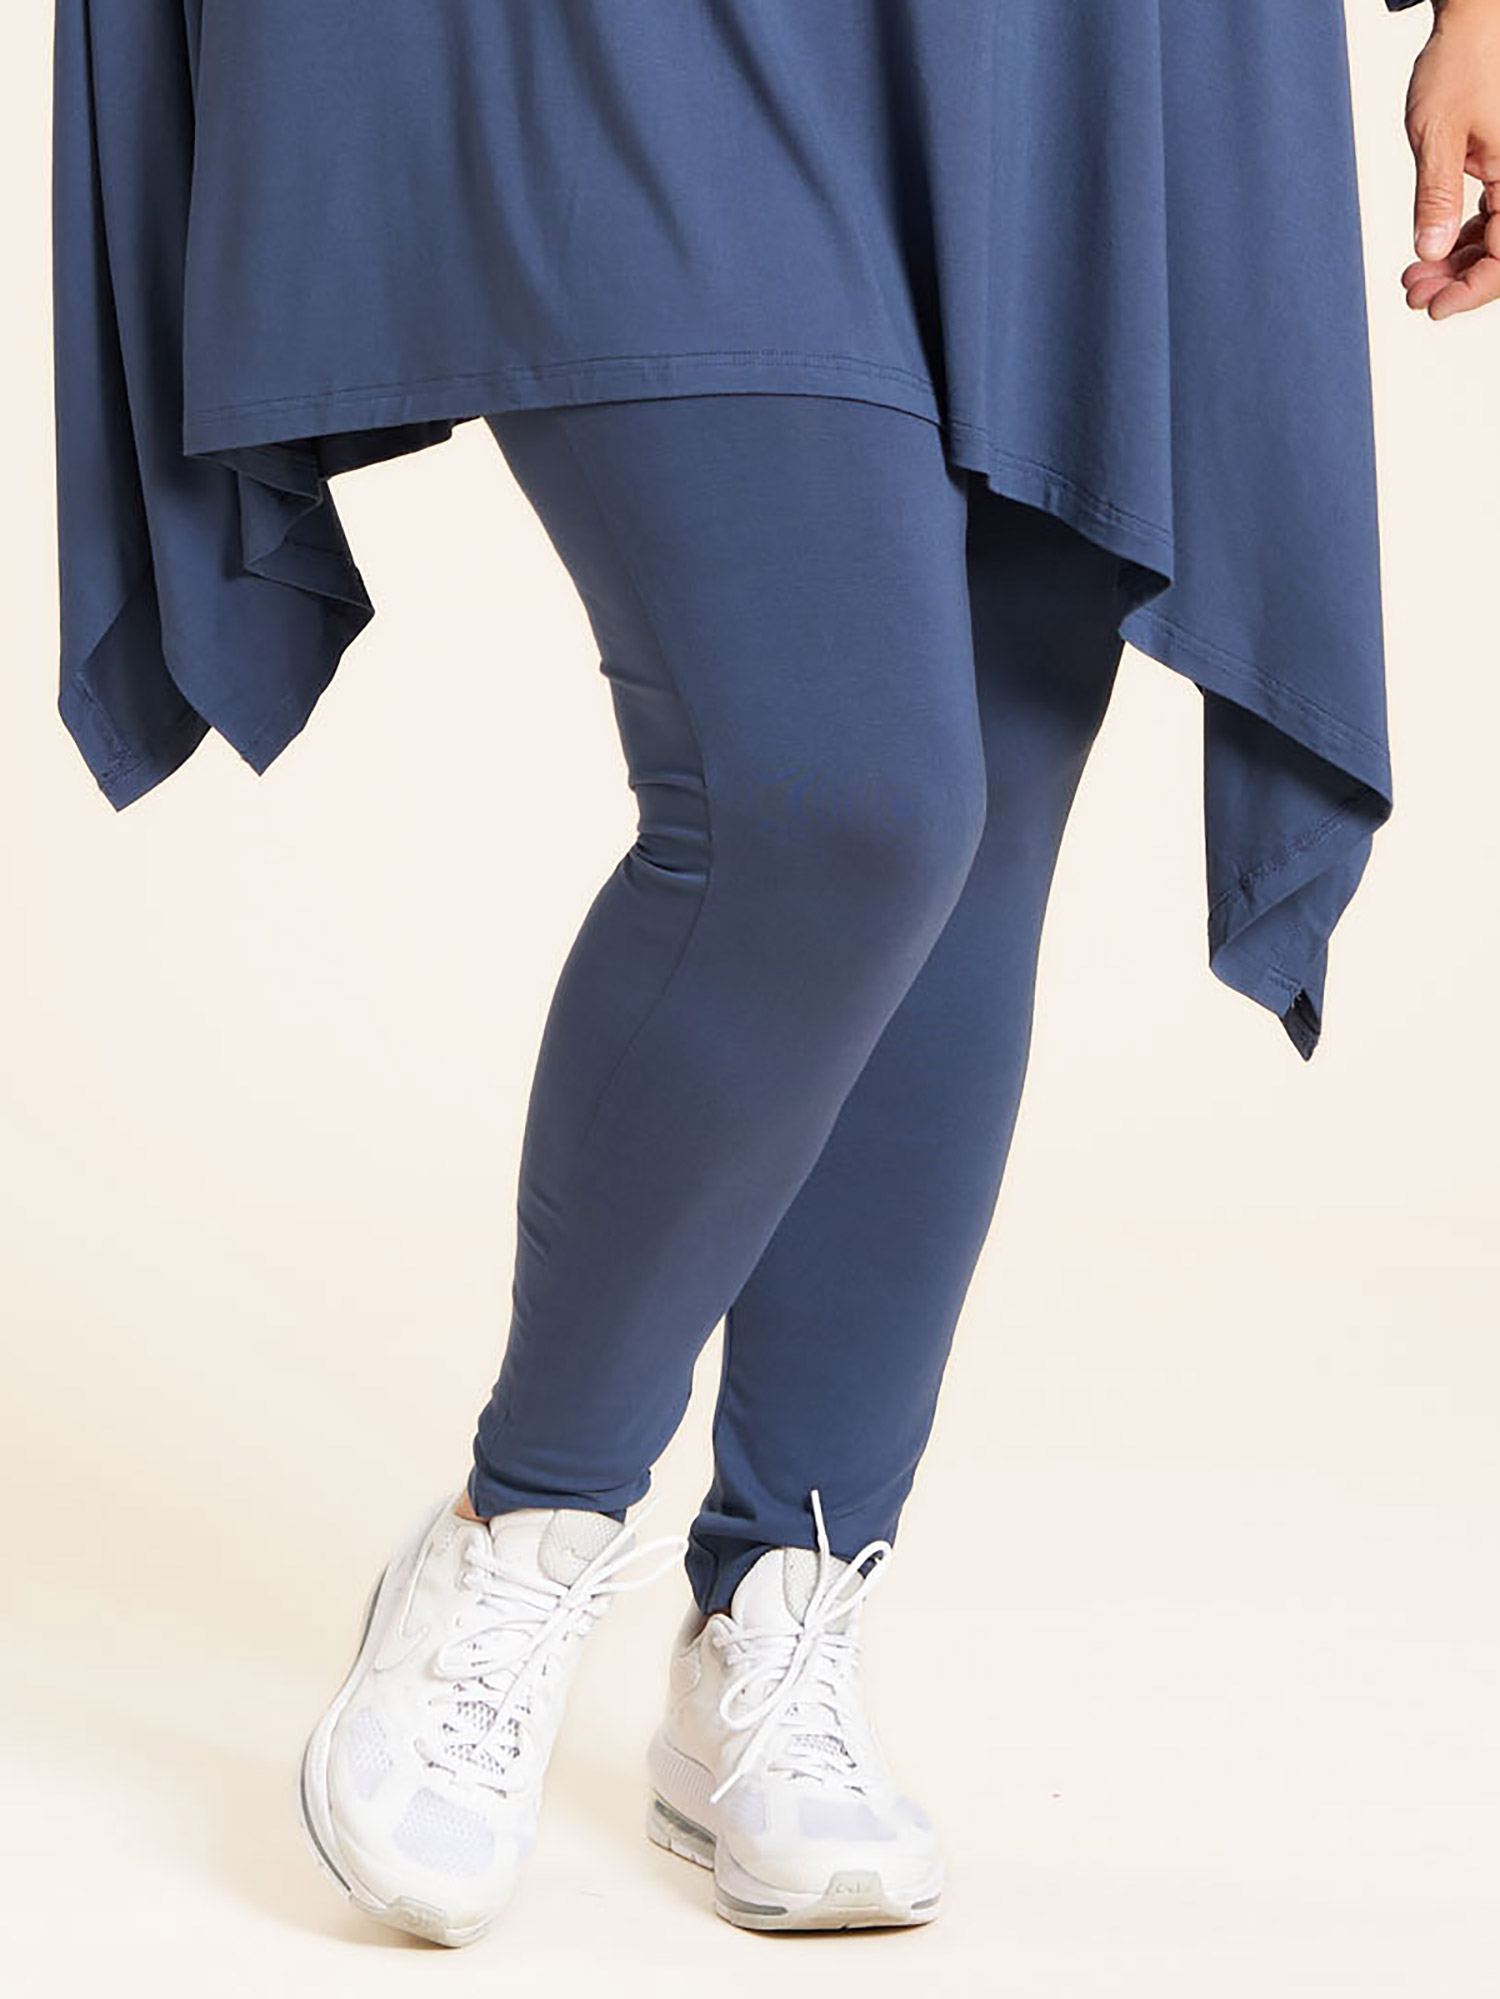 Ellen - Blå leggings i lækker viskose jersey, 54-56 XL female 54-56 XL ⋆ 349.00 DKK